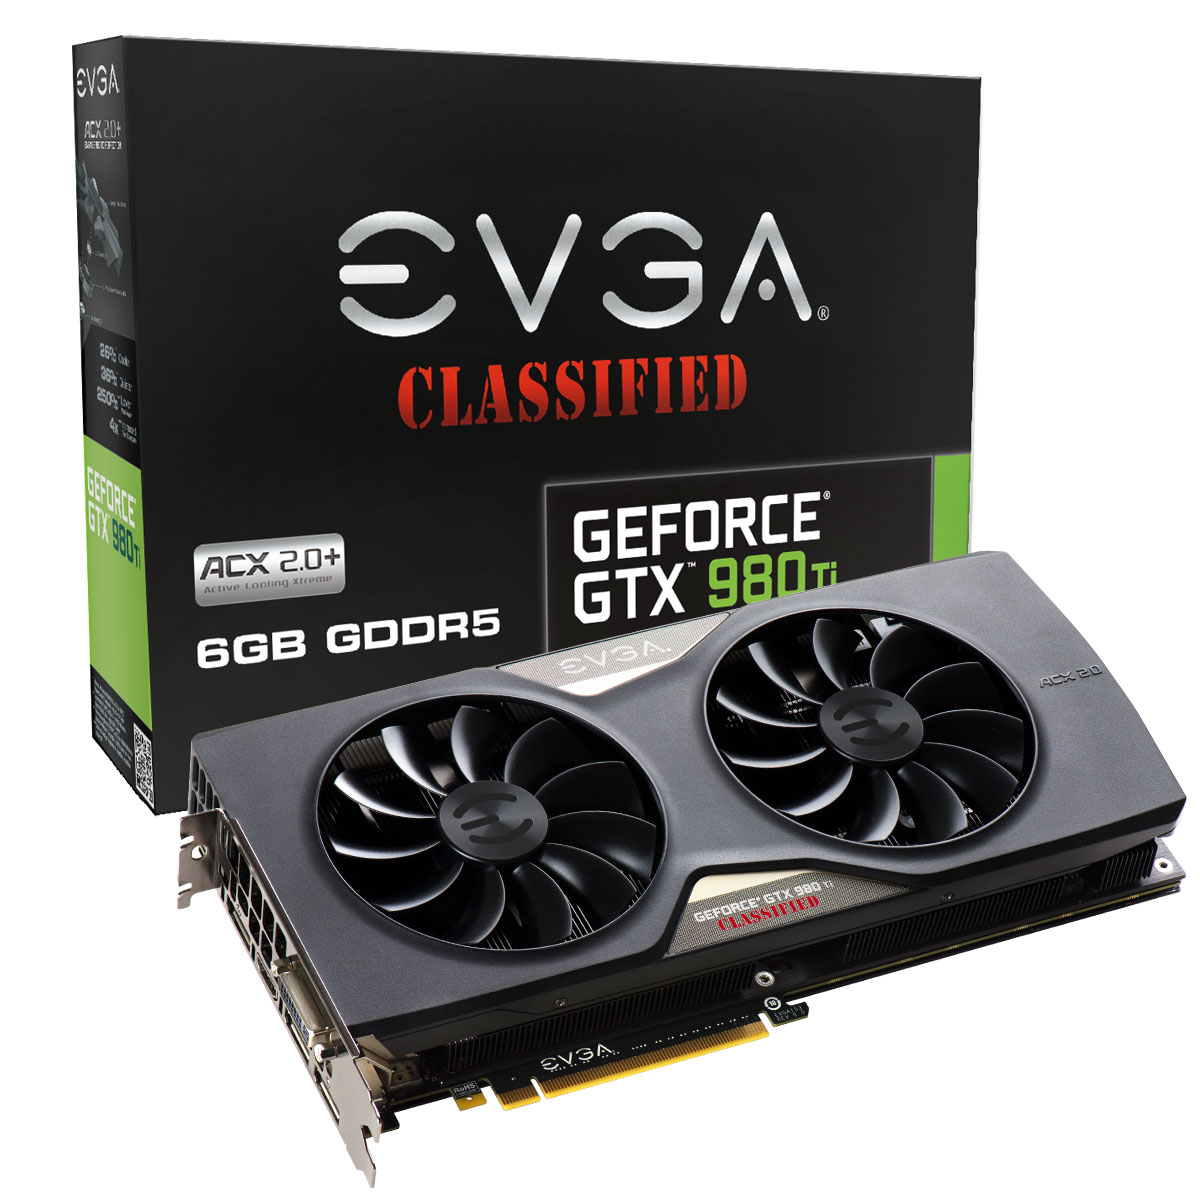 EVGA GeForce GTX 980 Ti Classified ACX 2.0+ announced 31